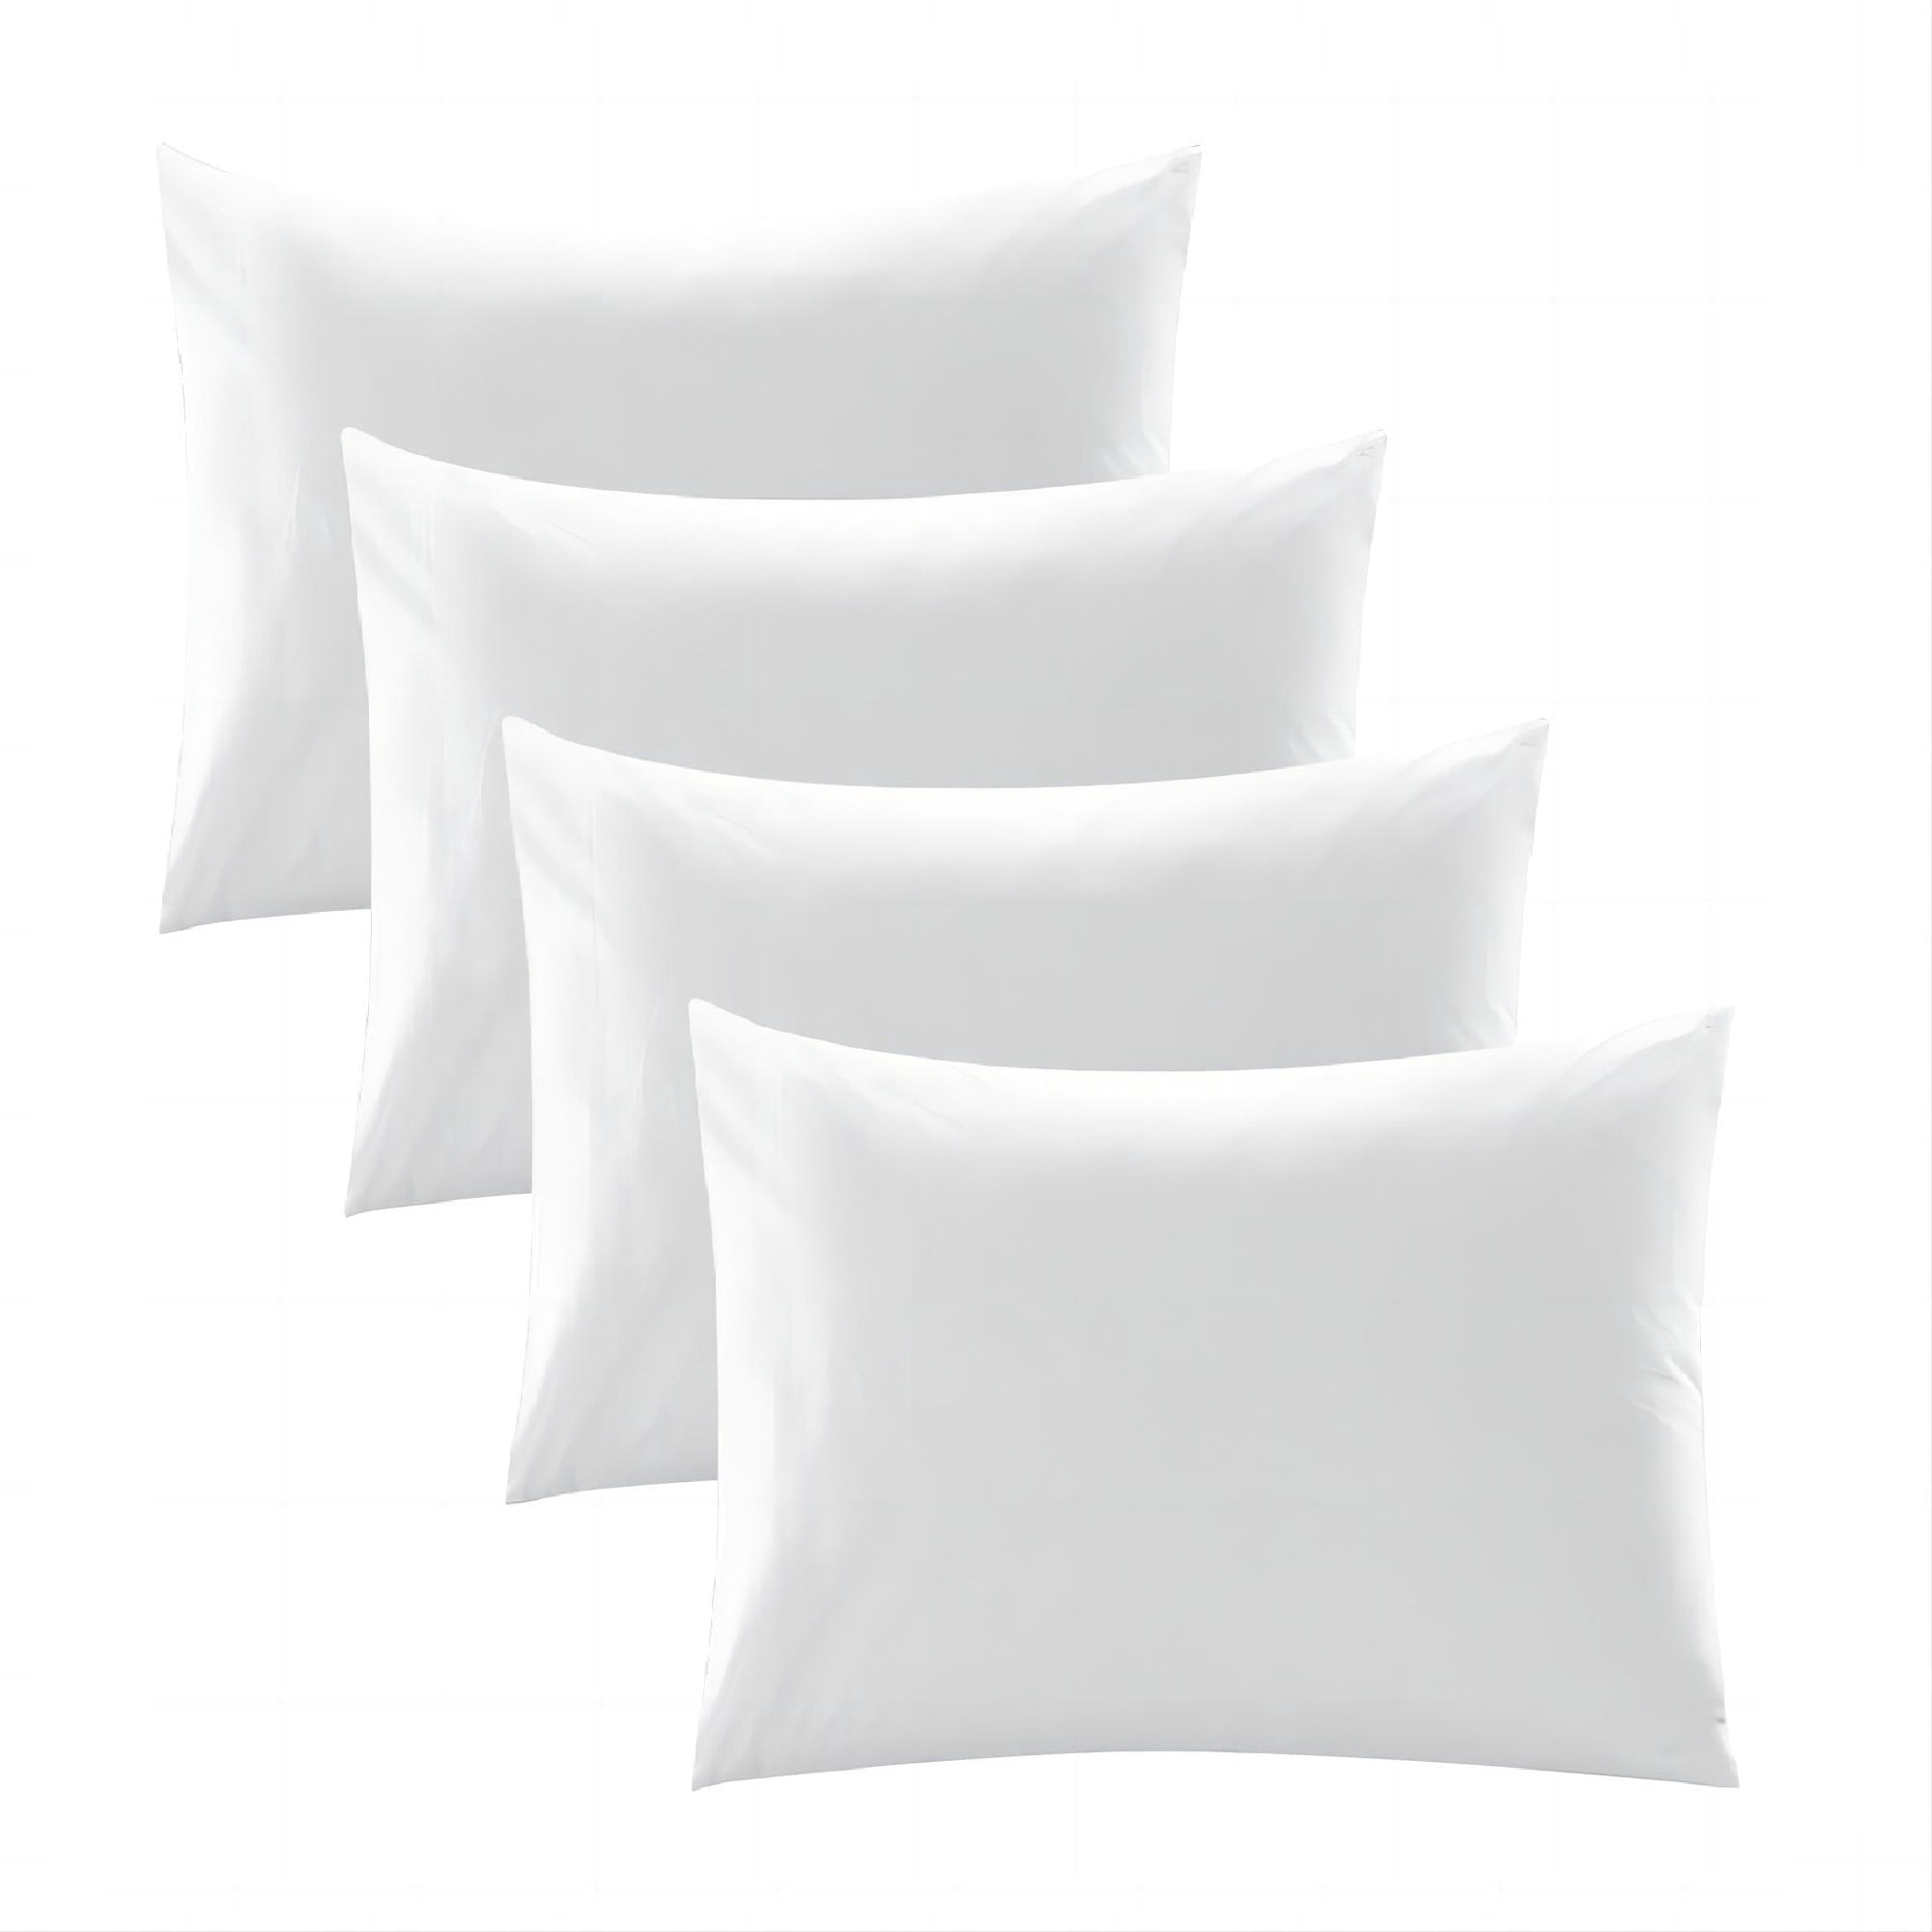 ANMINY Pillowcase set of 4 Pillow Cases-1